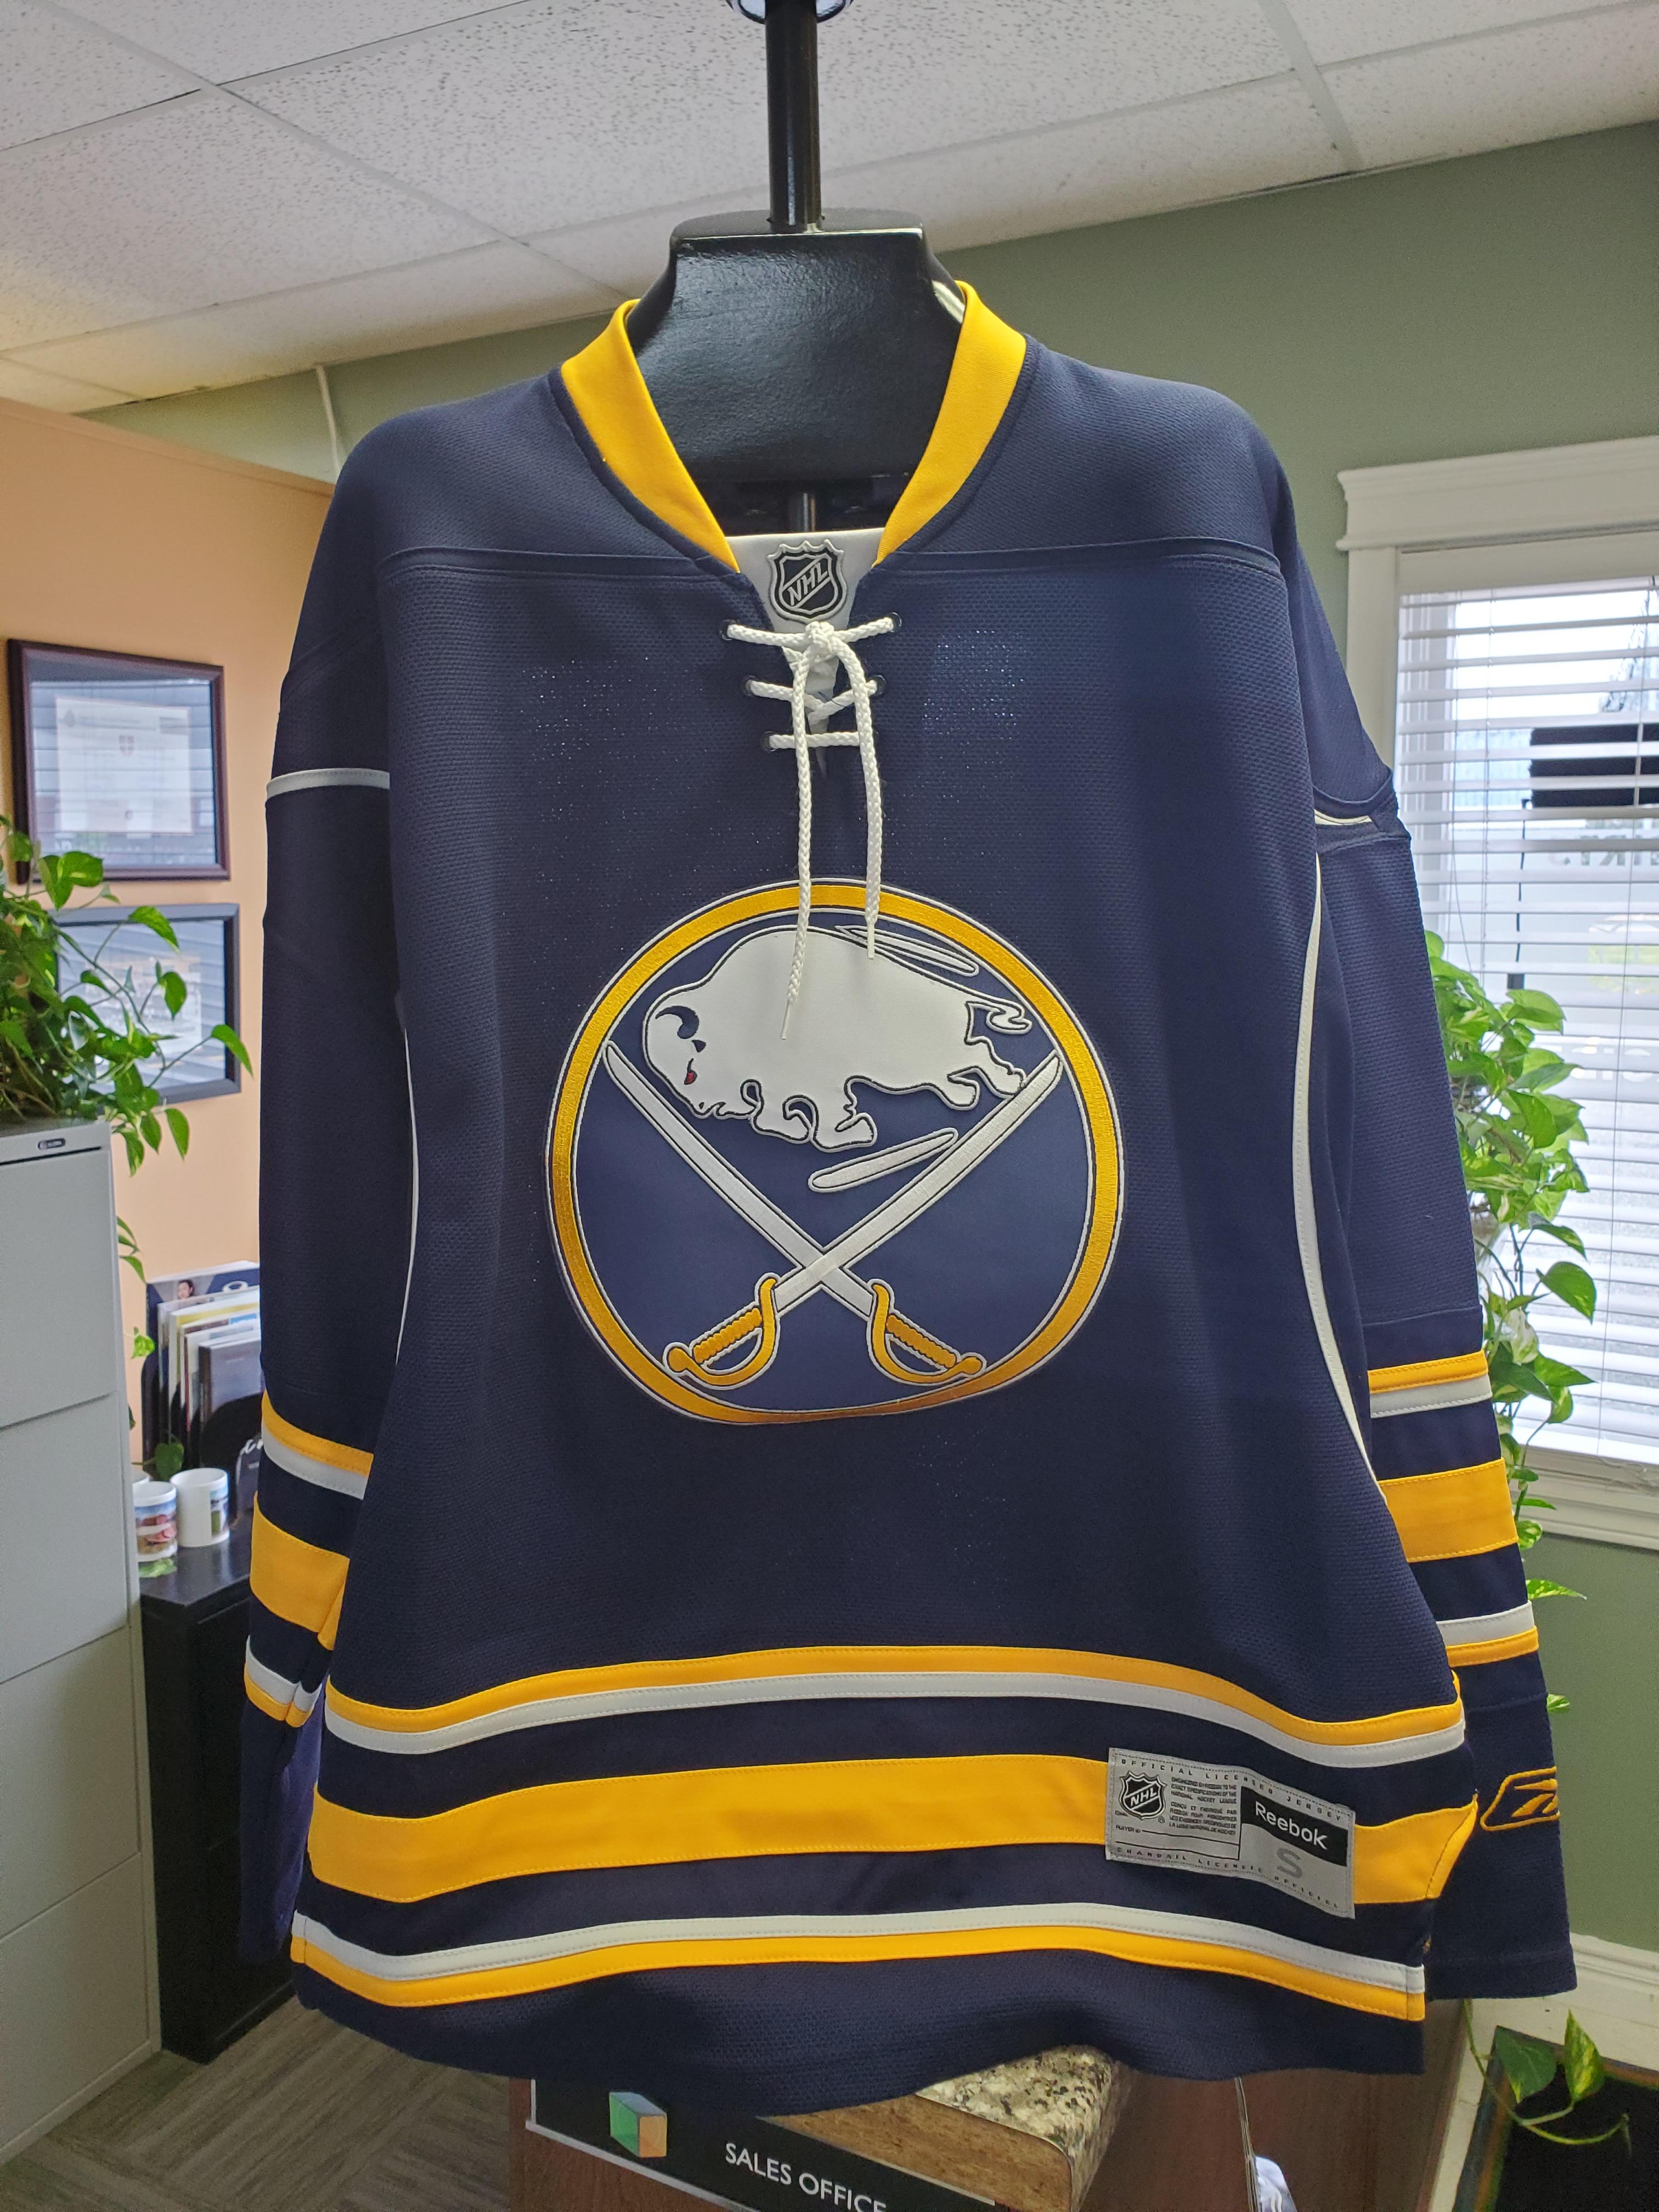 Reebok NHL Replica Hockey Jersey - Buffalo Sabres